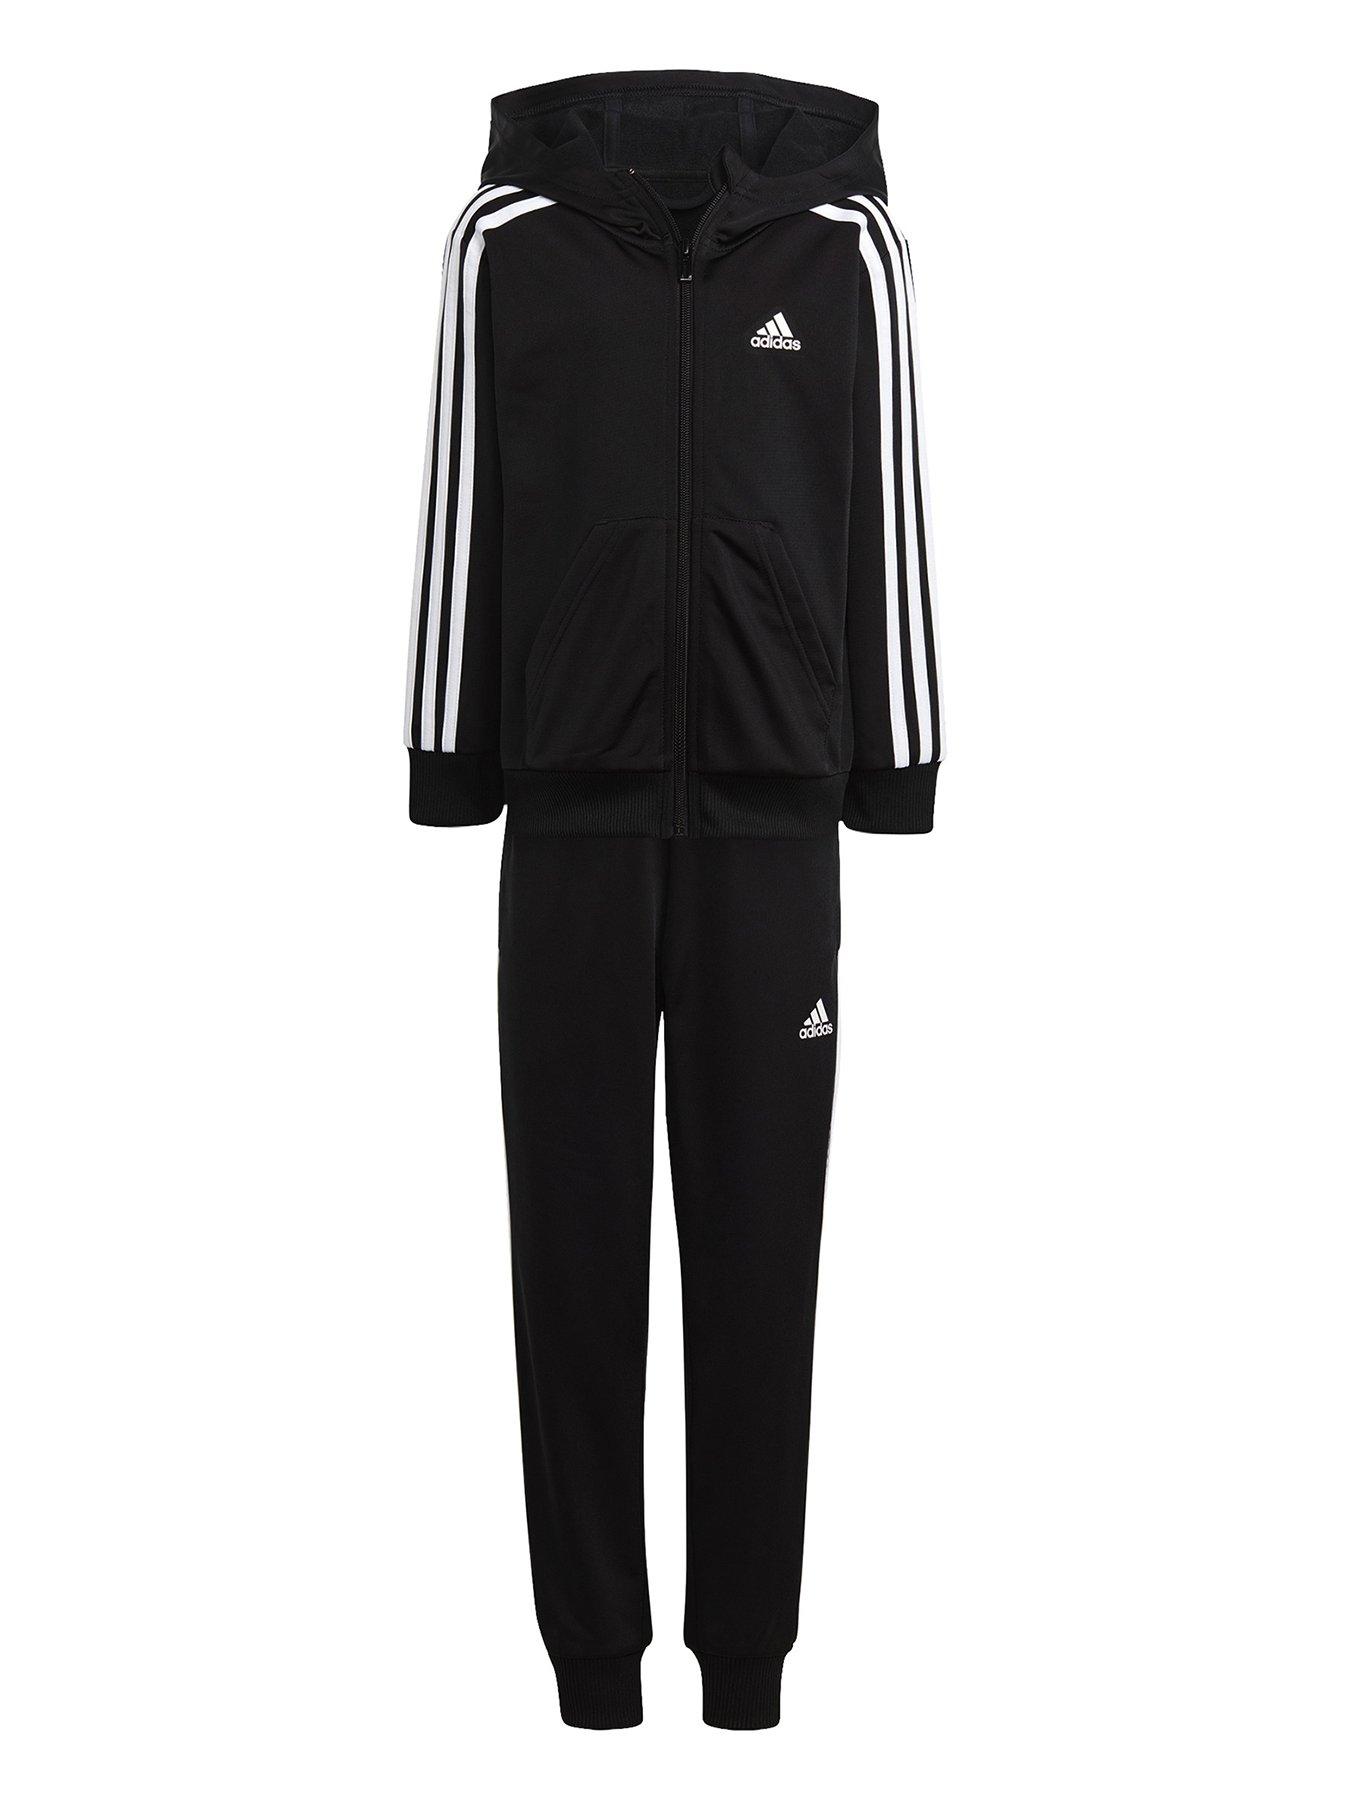 & | | Ireland Adidas baby Sportswear Child Very | sportswear | Tracksuits